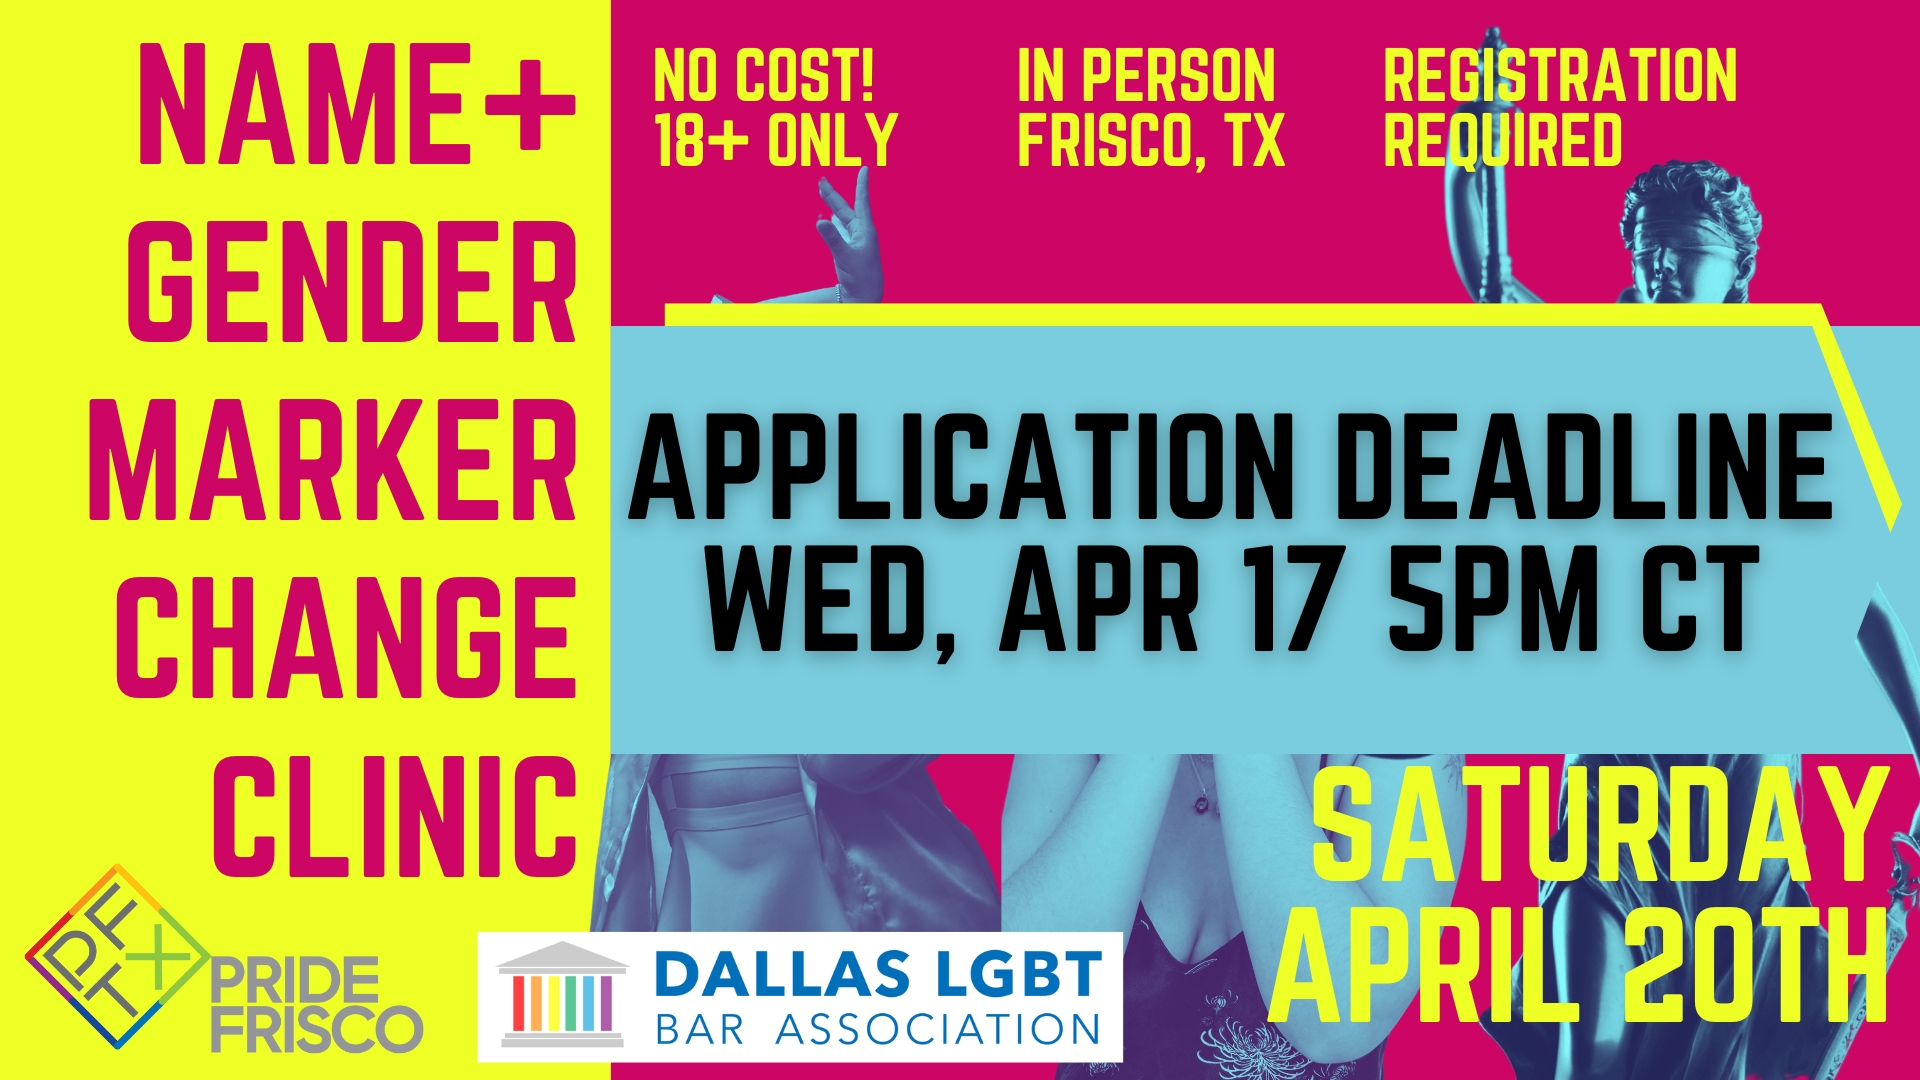 Name + Gender Marker Change Clinic (Dallas LGBT Bar Association in partnership with Pride Frisco)